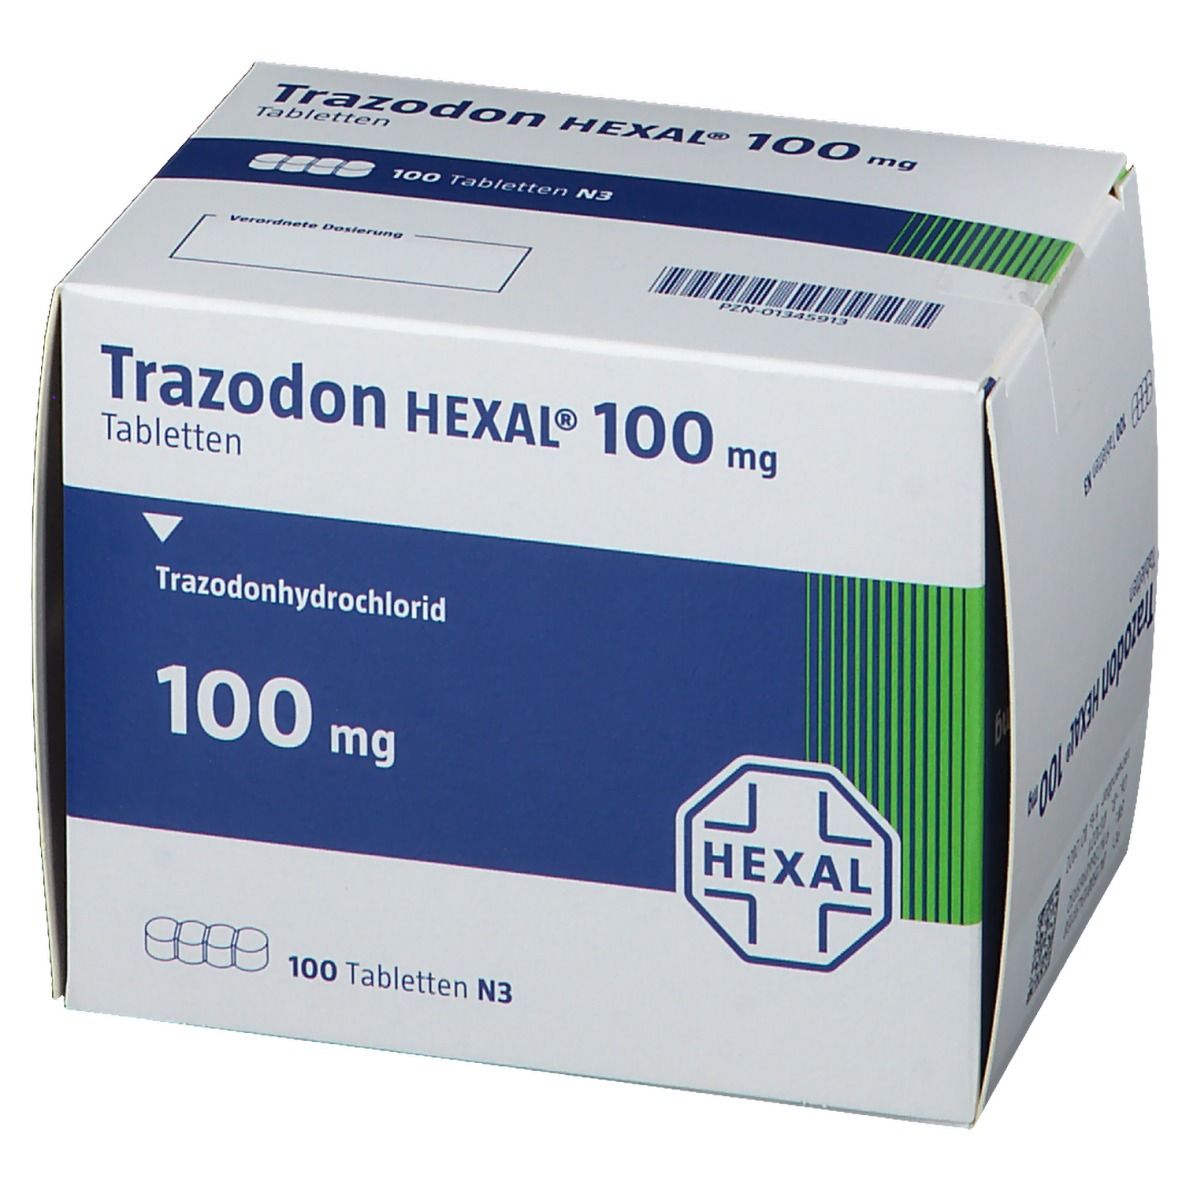 Trazodon HEXAL® 100 mg